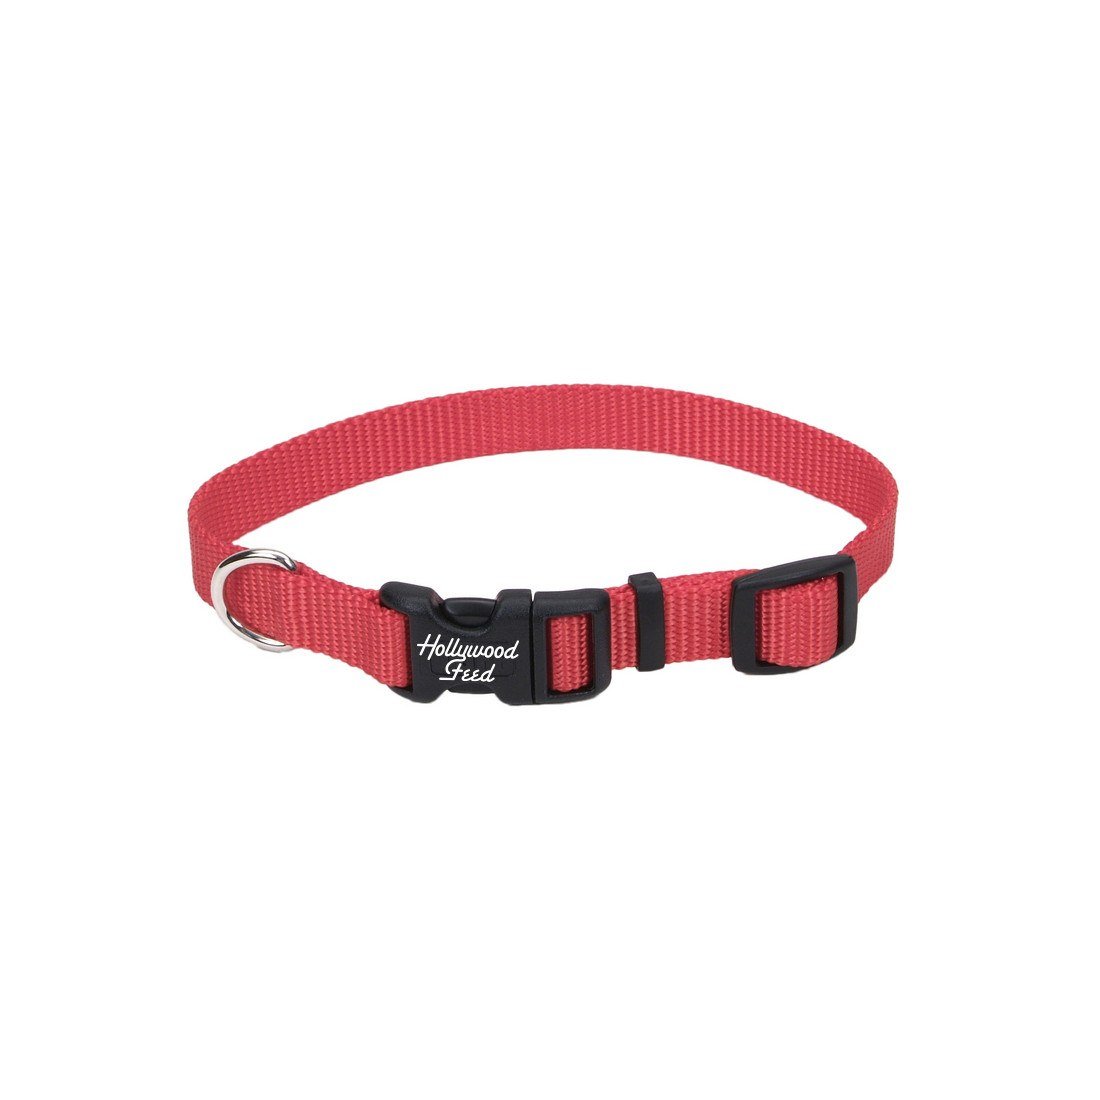 Ohio Made Nylon Dog Collar - Red